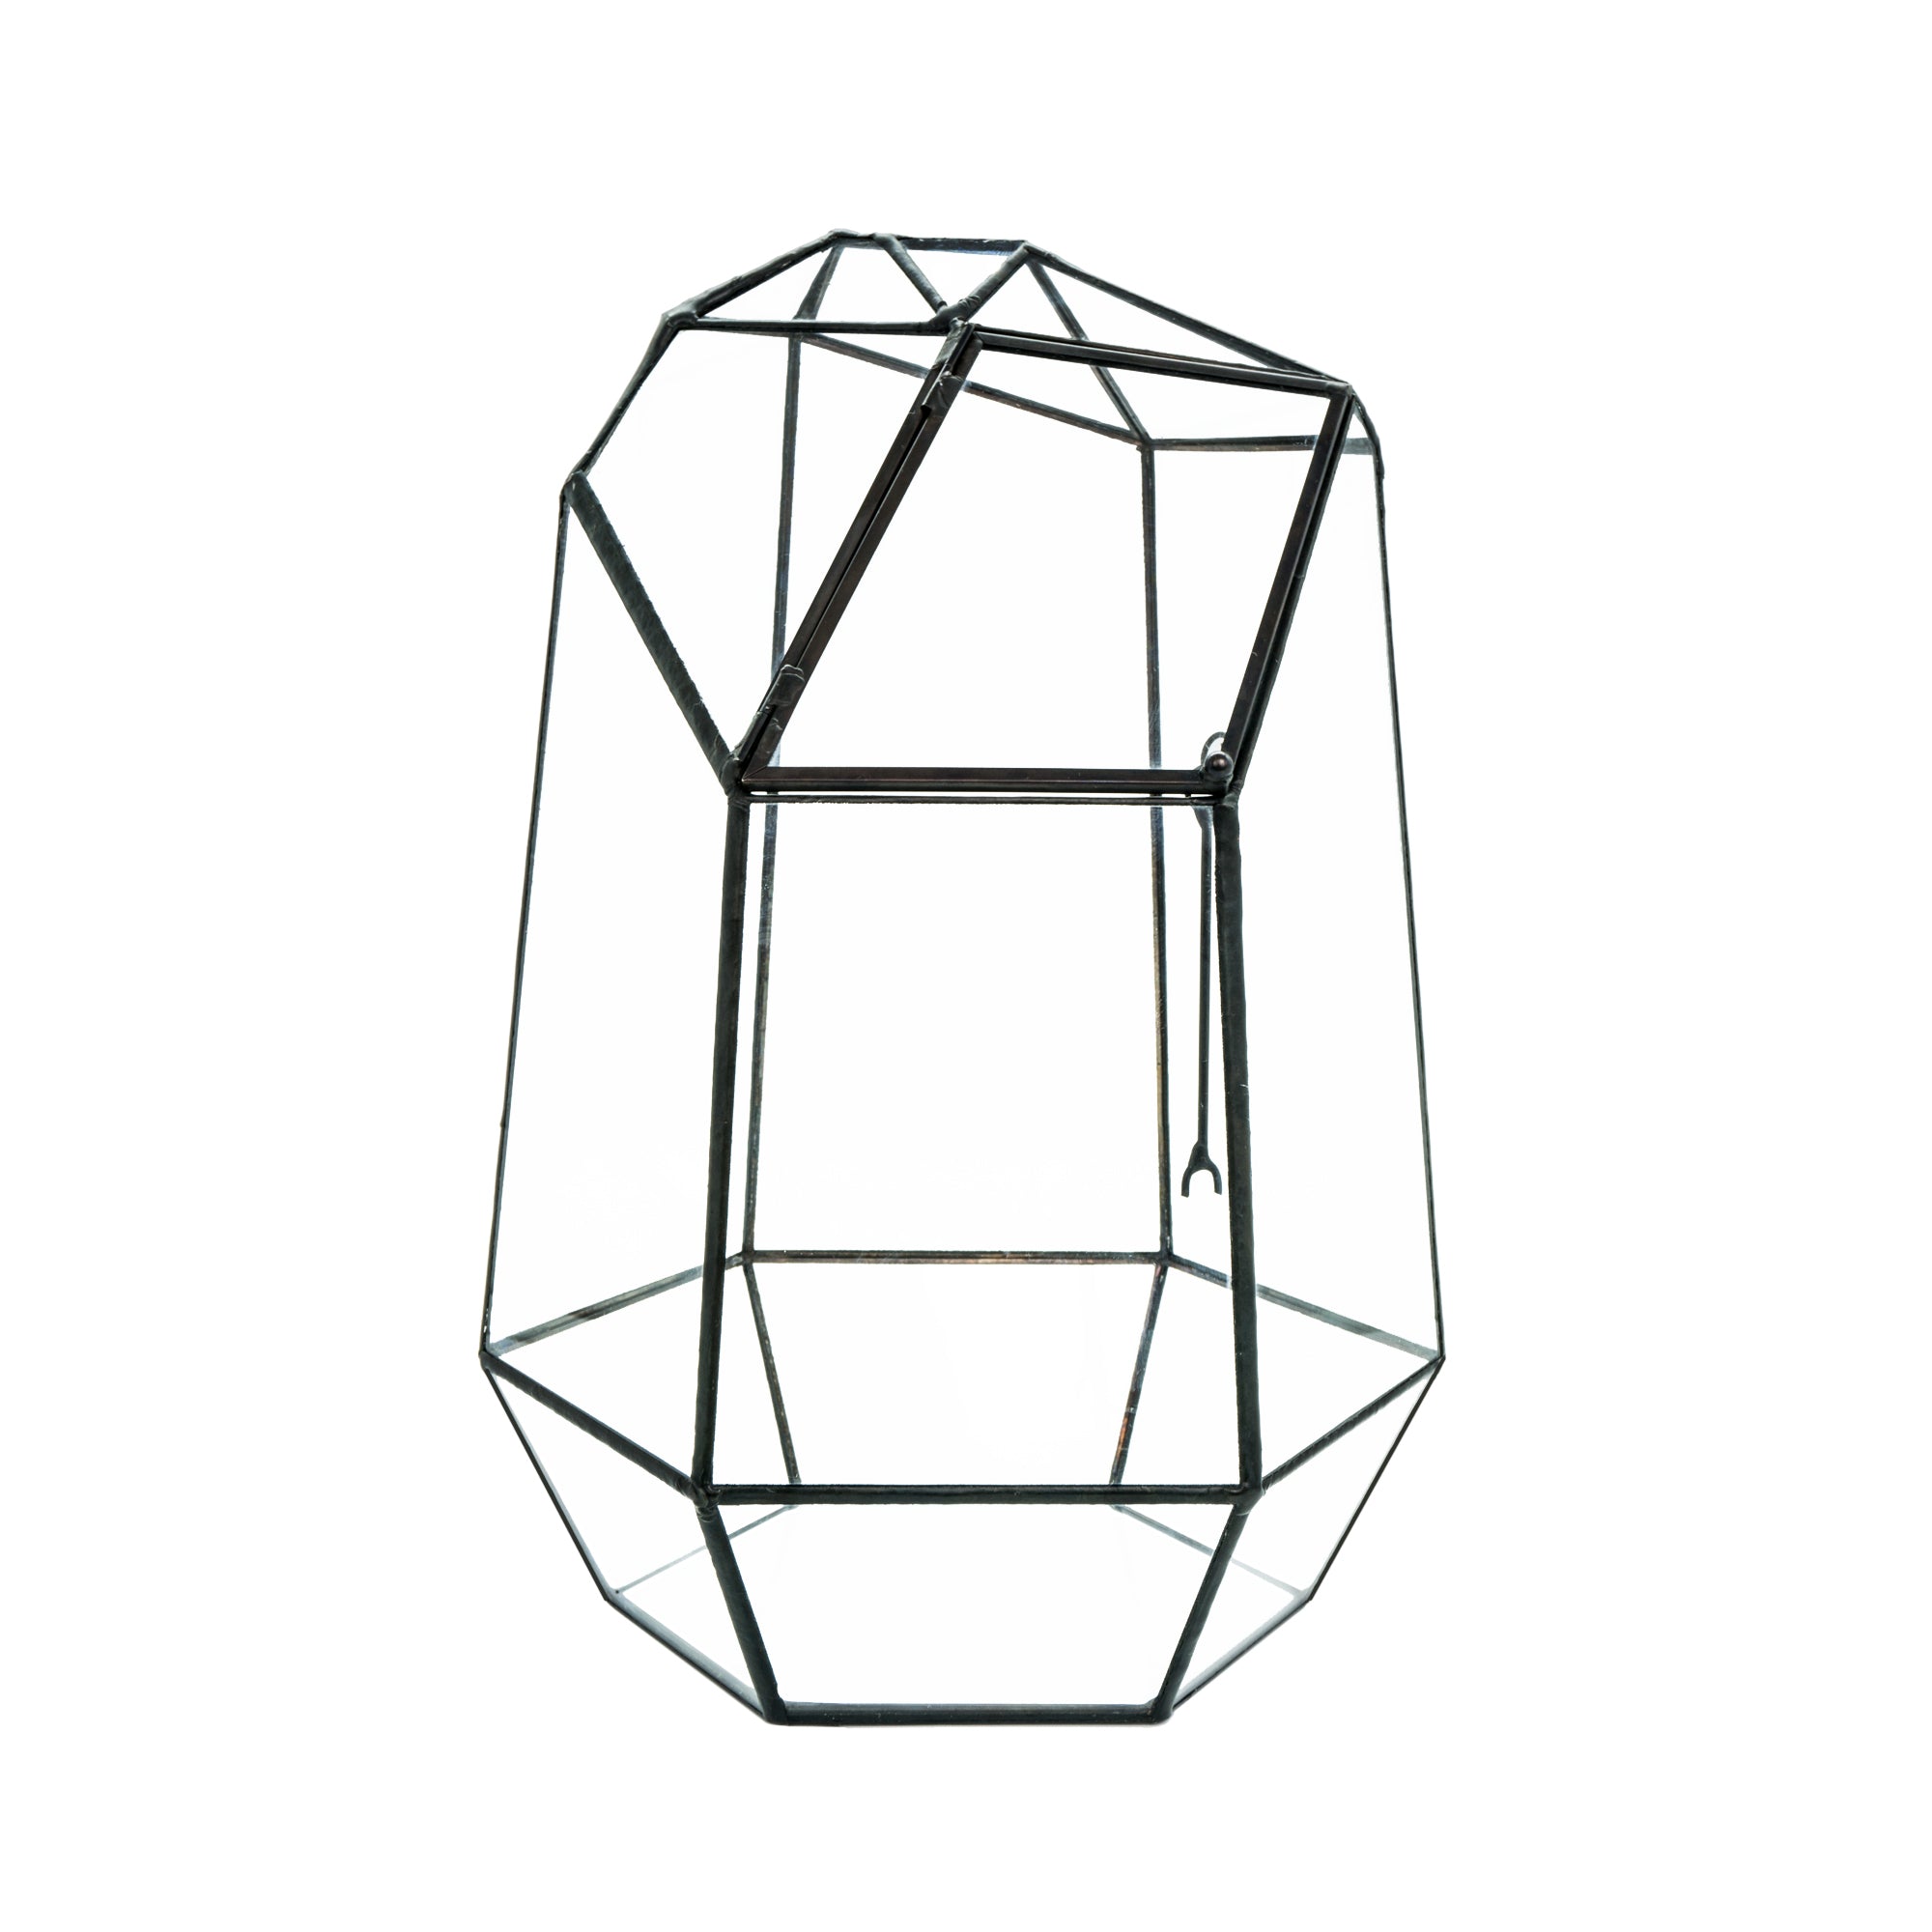 Indoor Plant Geometric Glass Vessel Container for Succulent Moss Plant Terrarium, 10.75 inch High